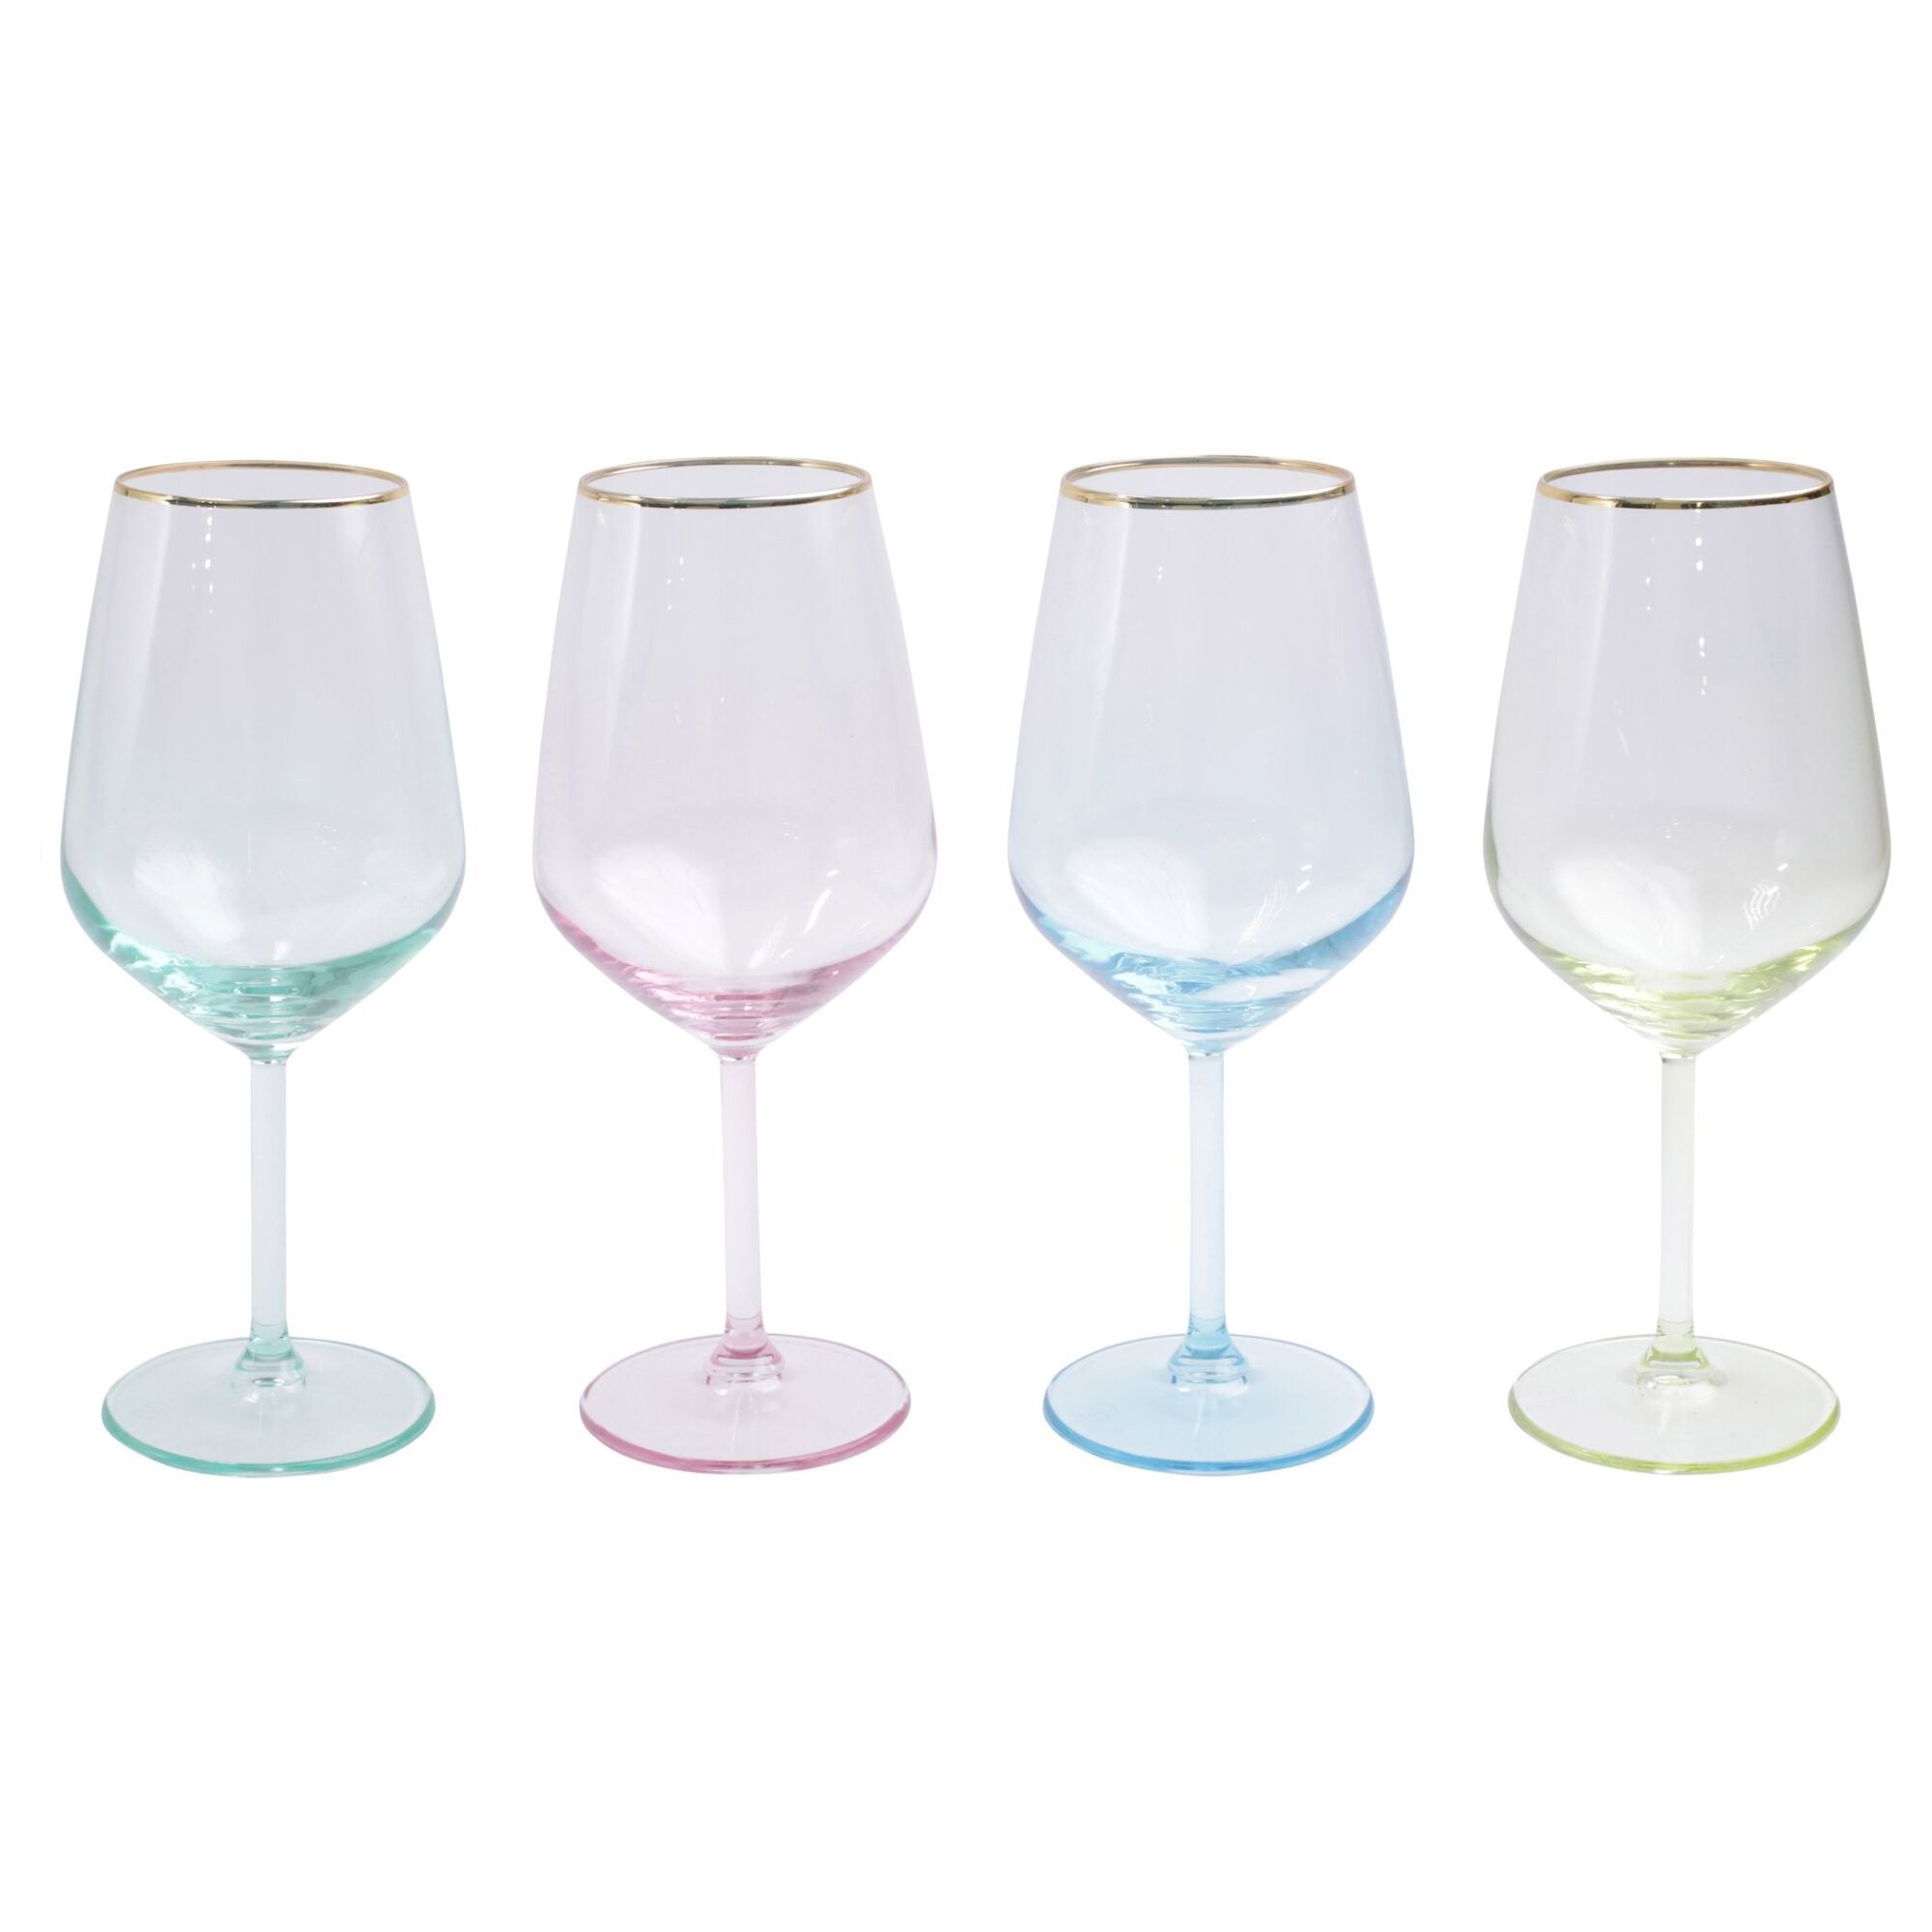 https://www.homethreads.com/files/vietri/vbow-52120-rainbow-assorted-wine-glasses-set-of-4.jpg